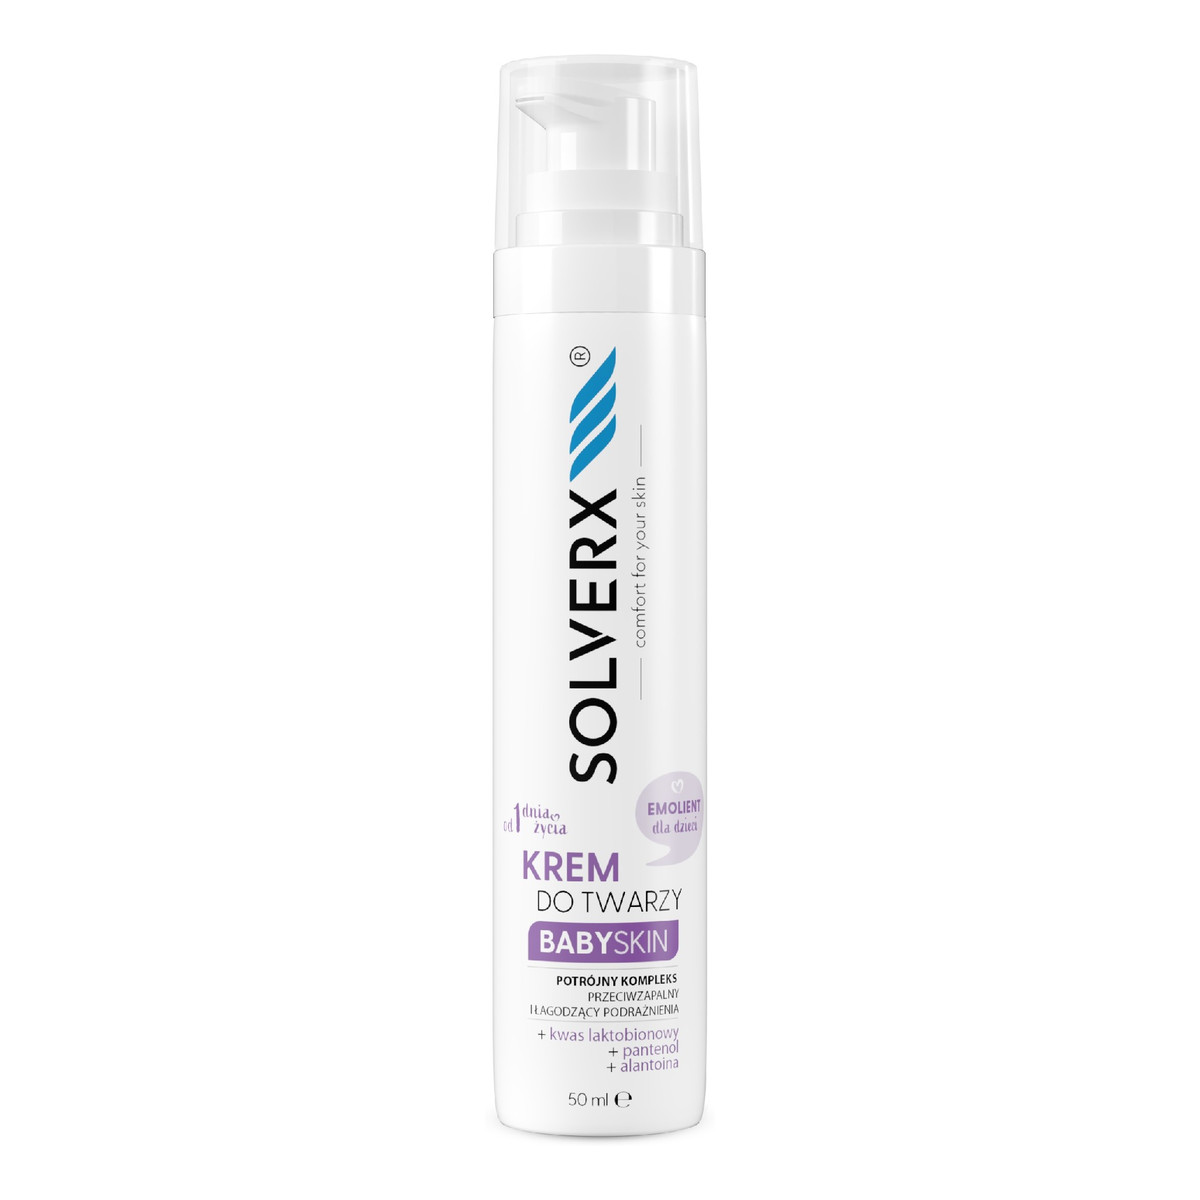 Solverx Baby Skin Krem - emolient do twarzy 50ml